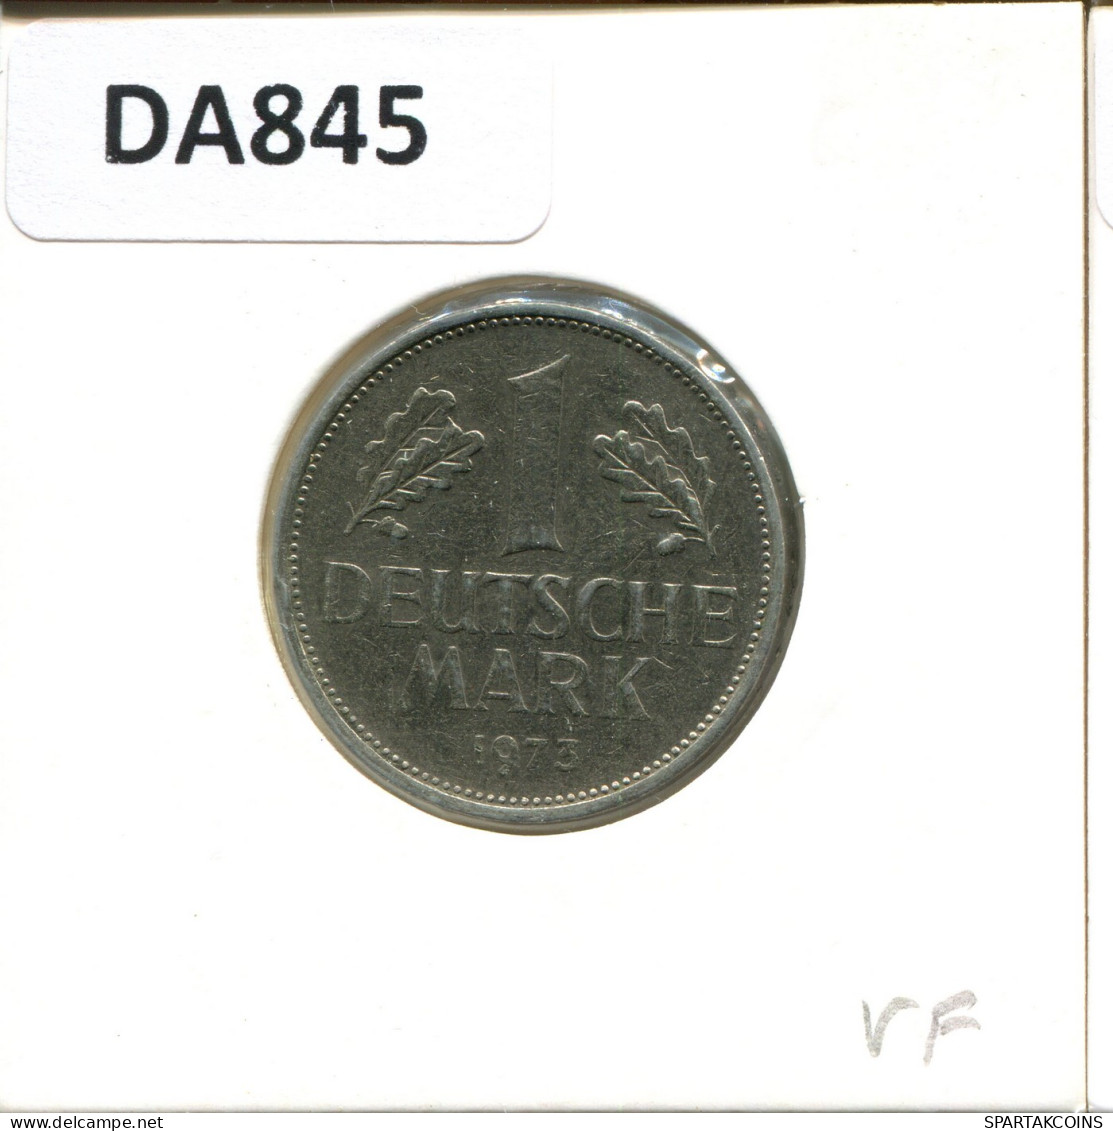 1 DM 1973 G BRD DEUTSCHLAND Münze GERMANY #DA845.D - 1 Mark